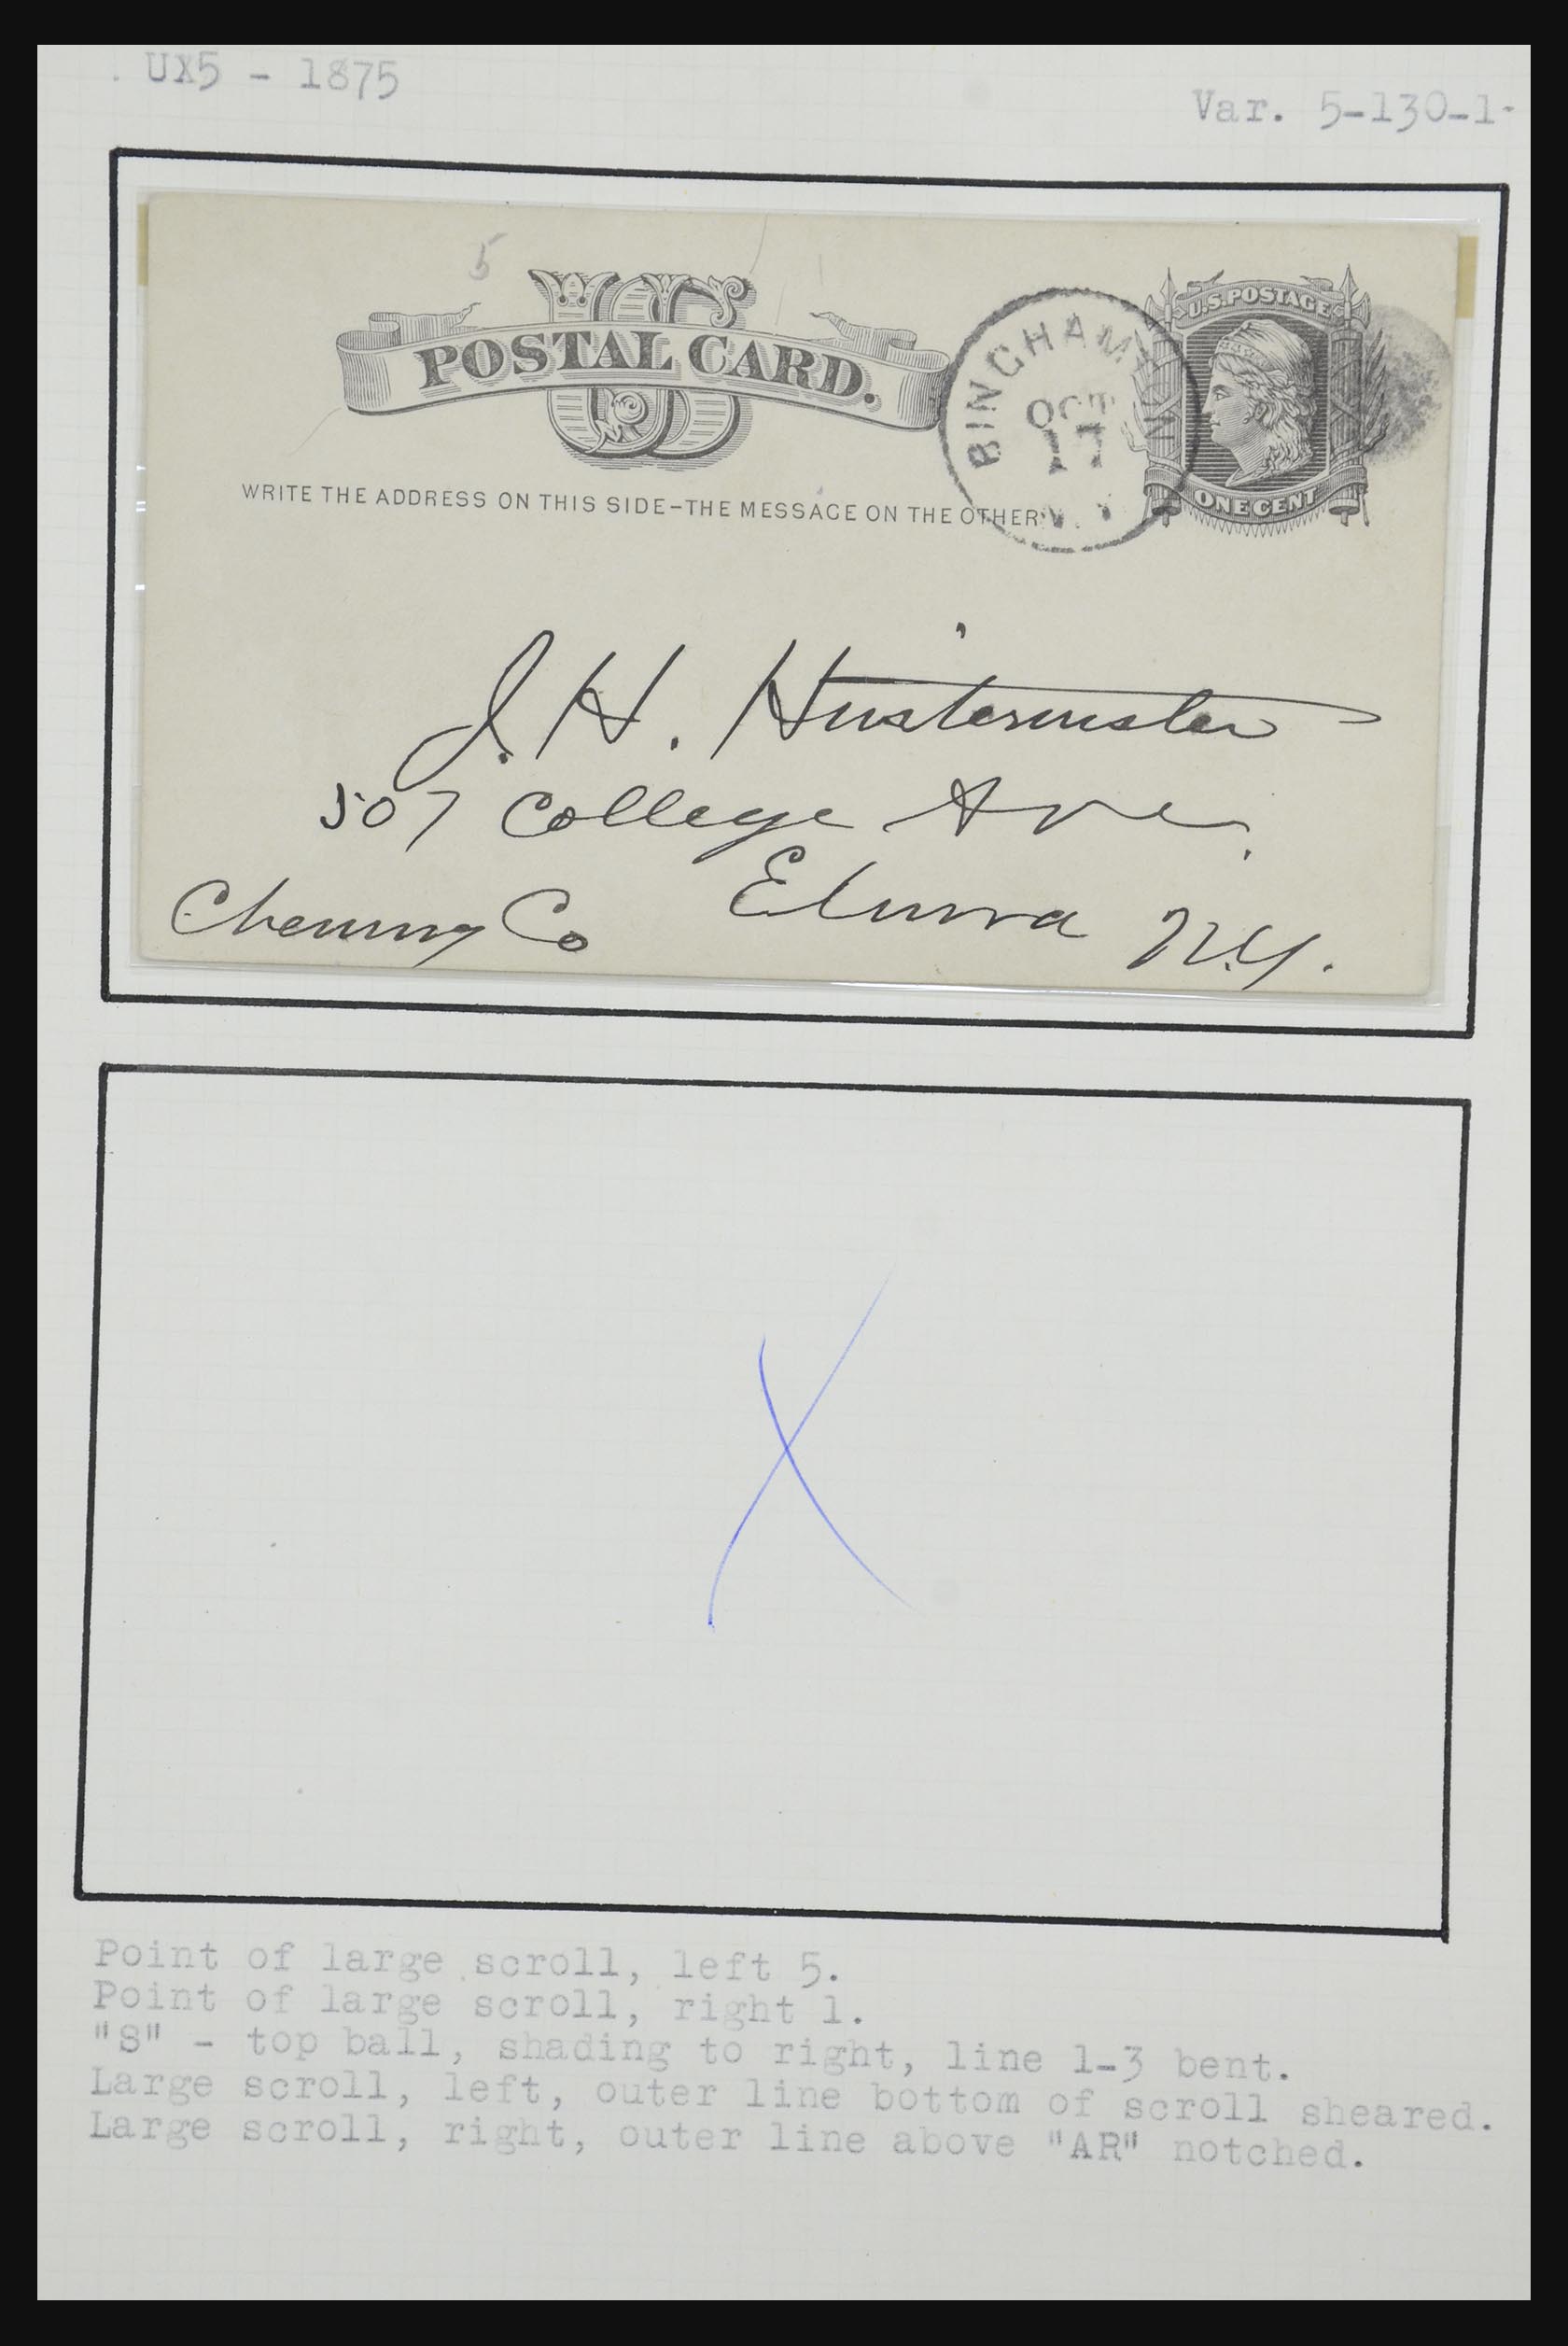 32209 094 - 32209 USA postal cards 1873-1950.